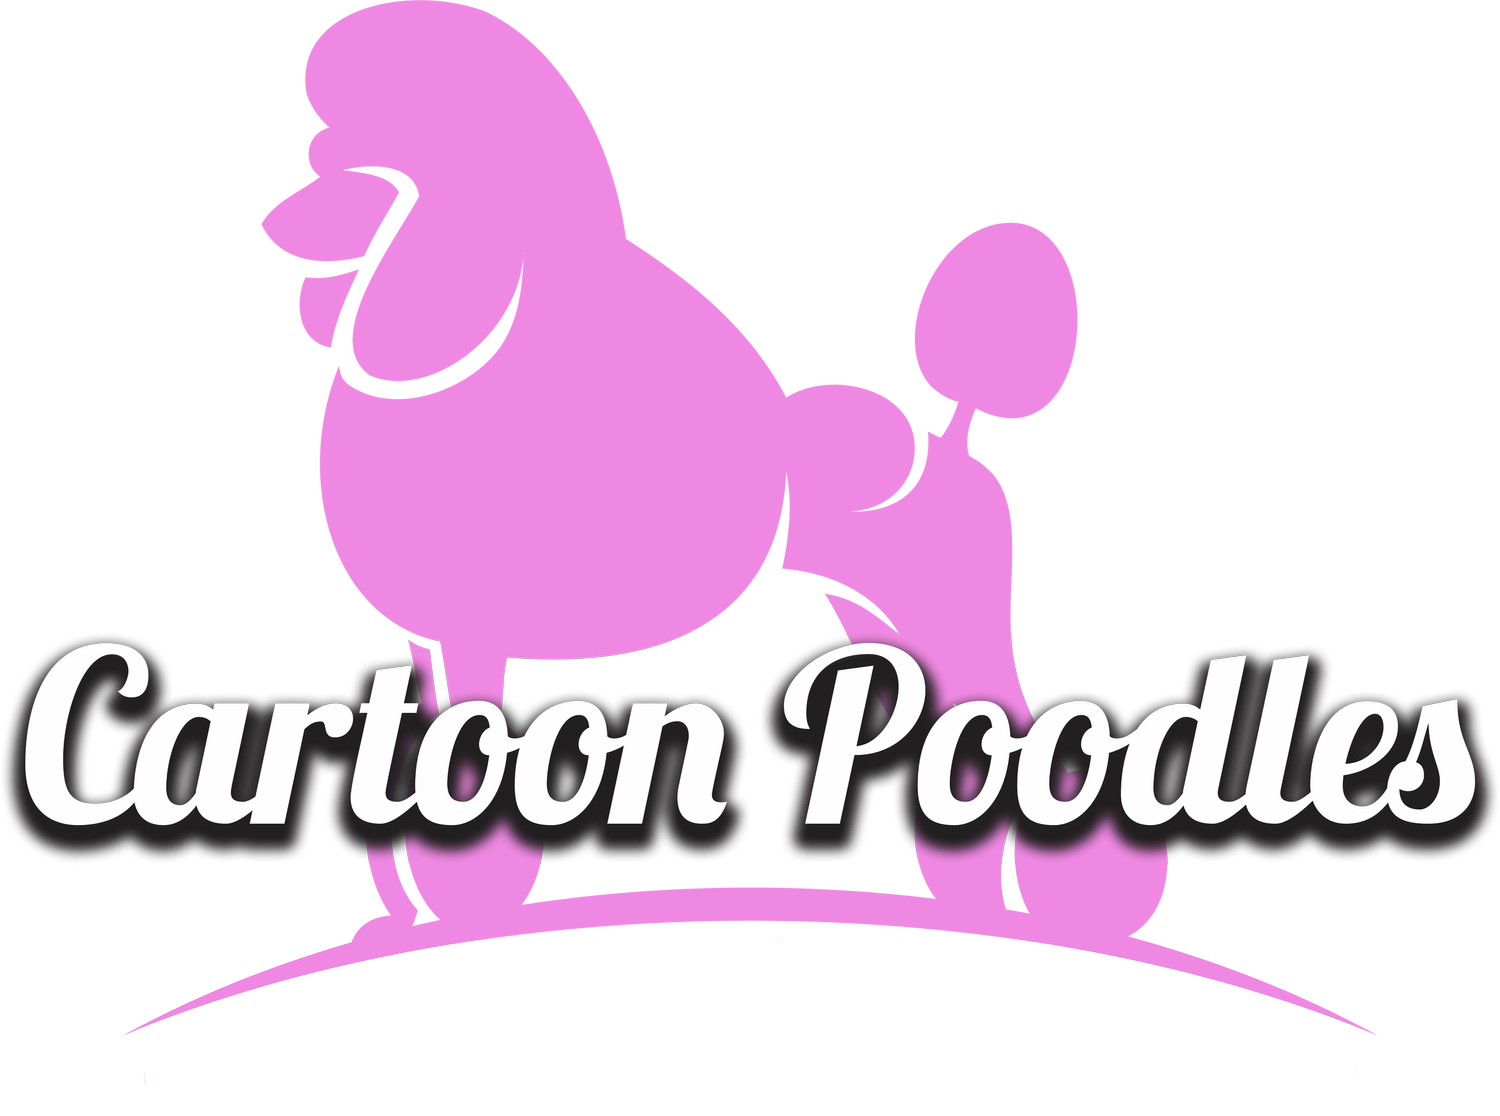 The Cartoon Poodles